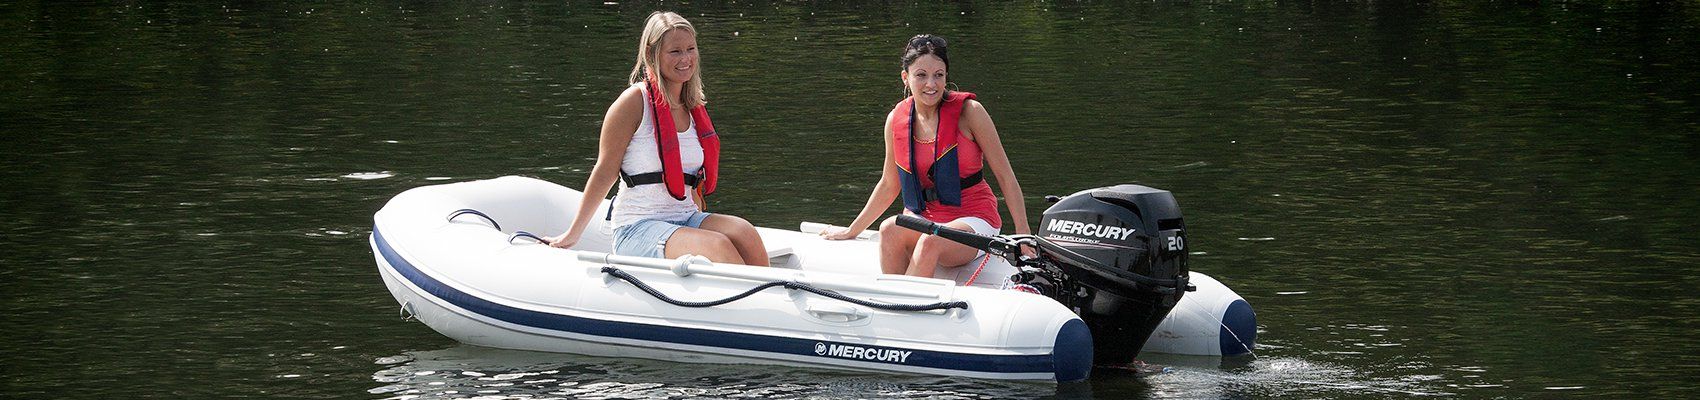 Mercury Inflatable Boats